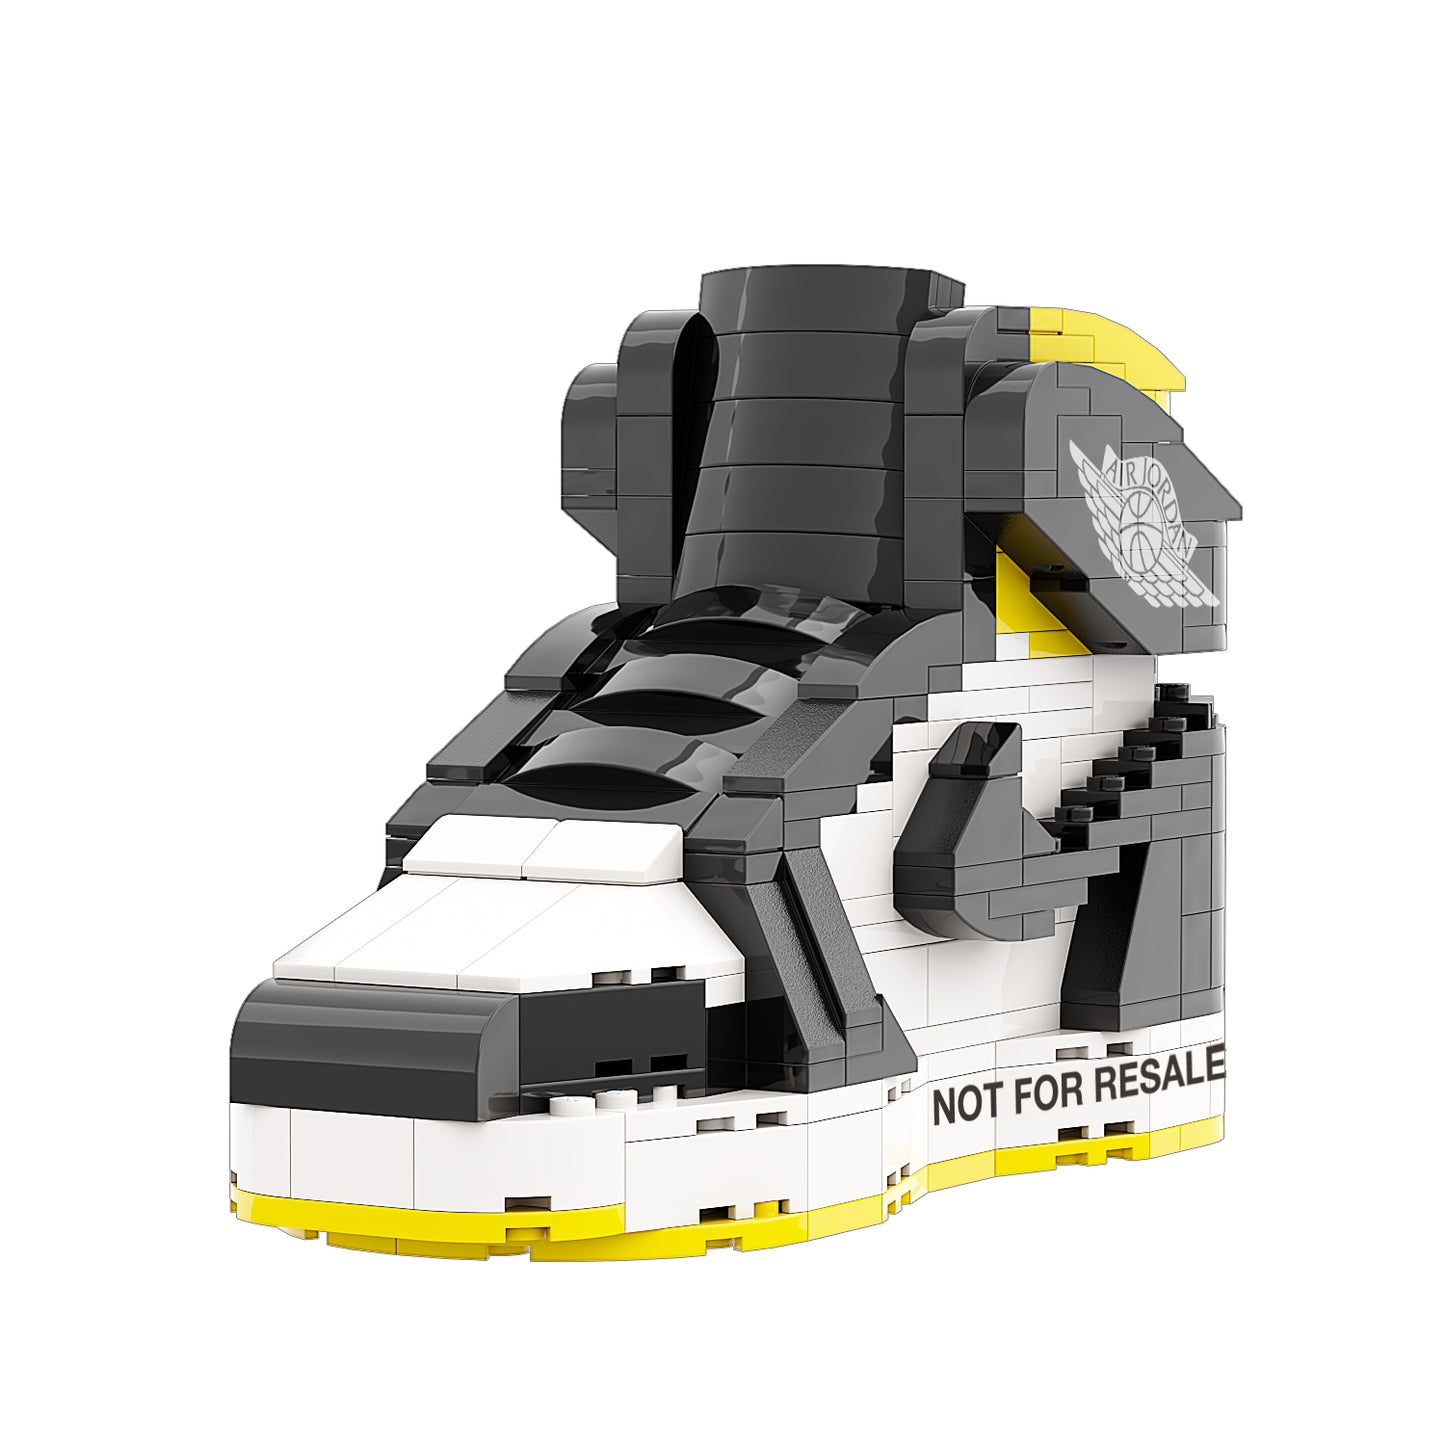 REGULAR "AJ1 NOT FOR RESALE Varsity Maize" Sneaker Bricks with Mini Figure